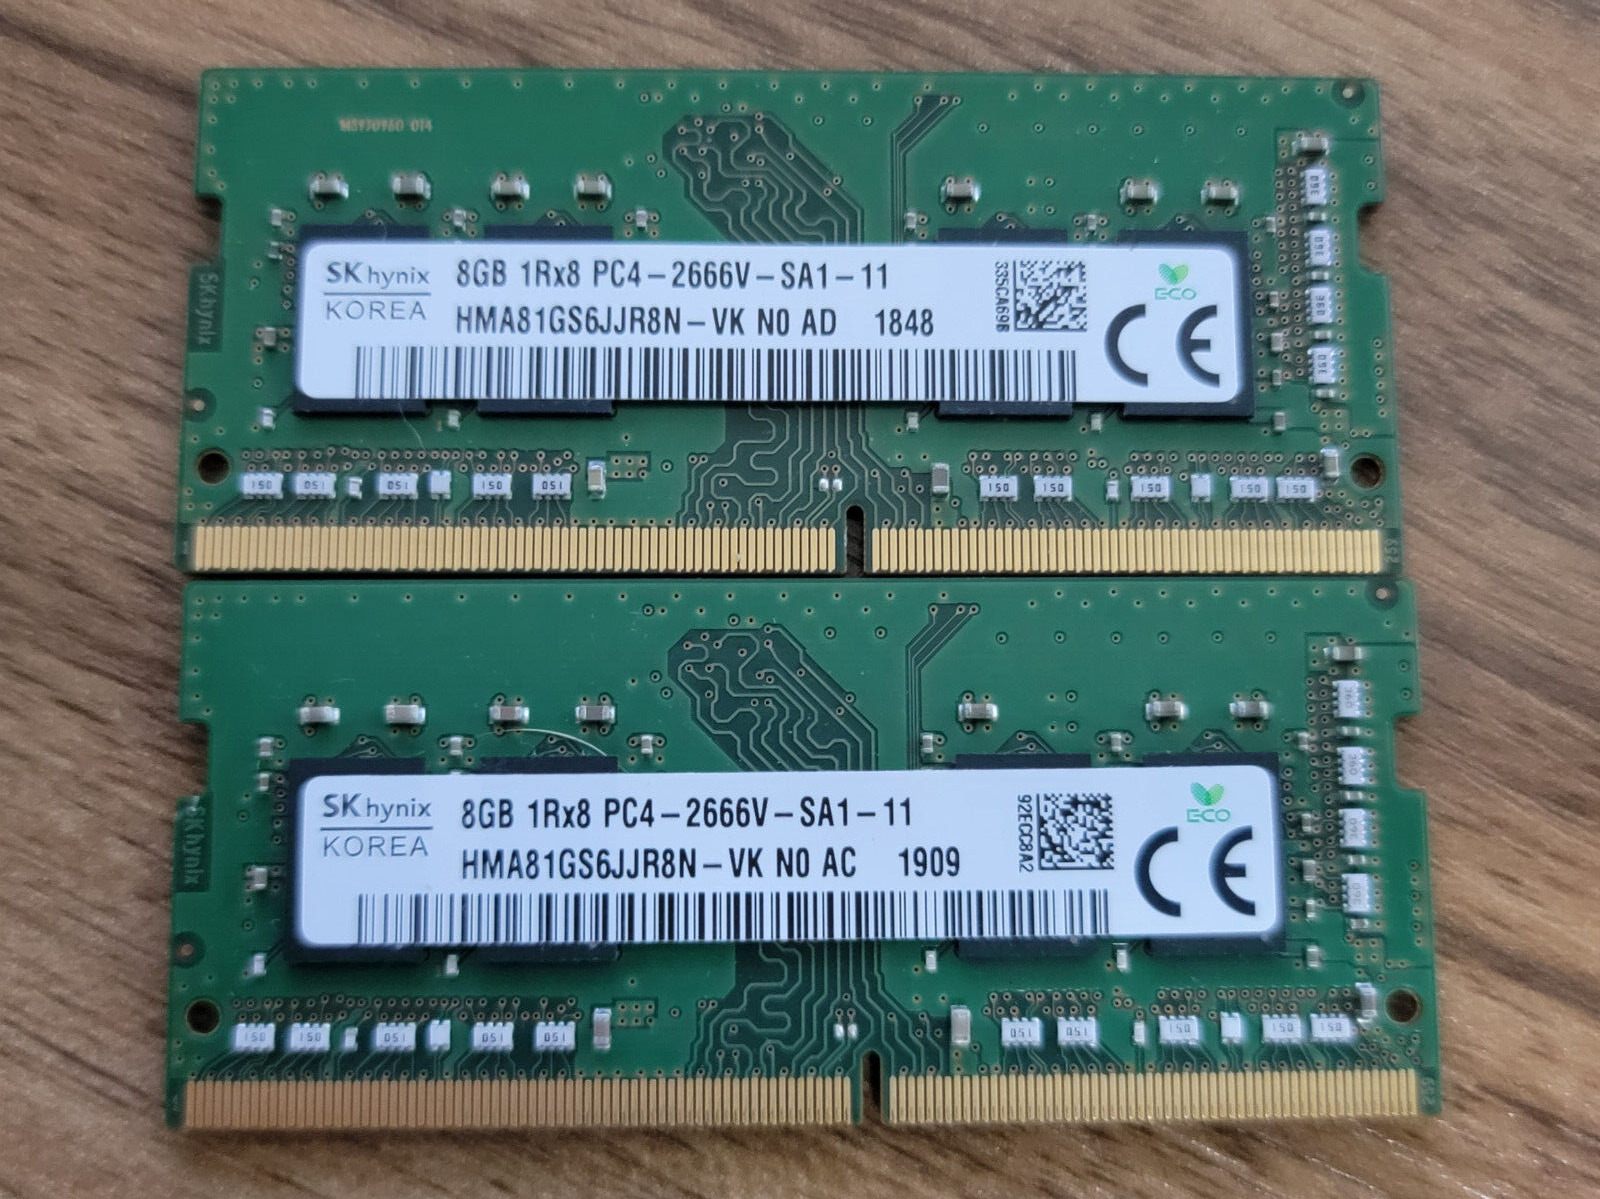 Lot of 2 SK HYNIX 8GB 1Rx8 PC4-2666V DDR4 SODIMM MEMORY RAM HMA81GS6JJR8N-VK